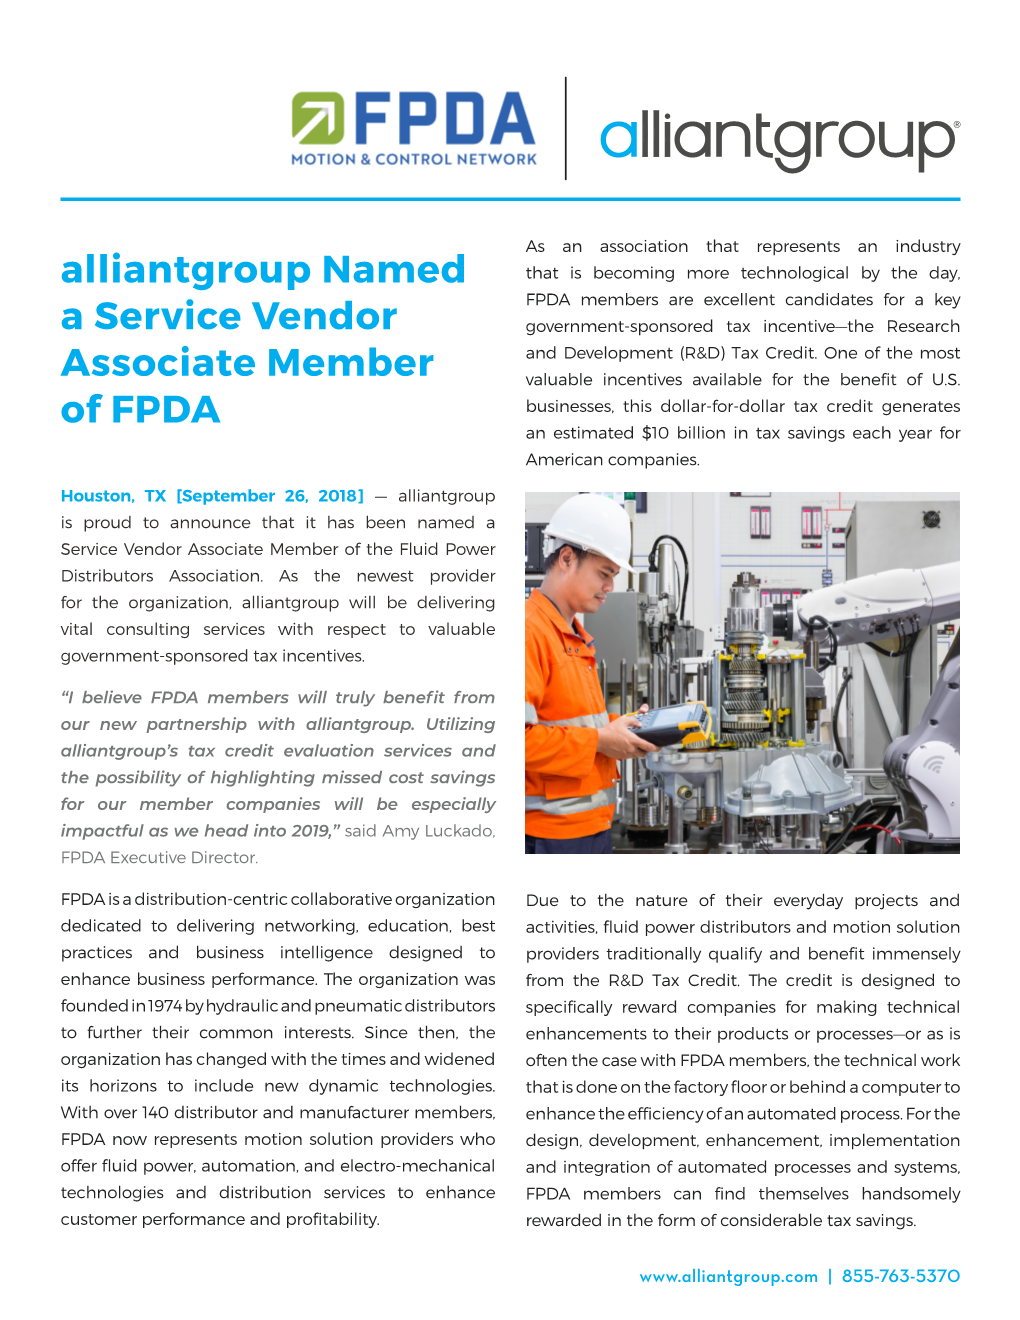 Alliantgroup Named a Service Vendor Associate Member of FPDA